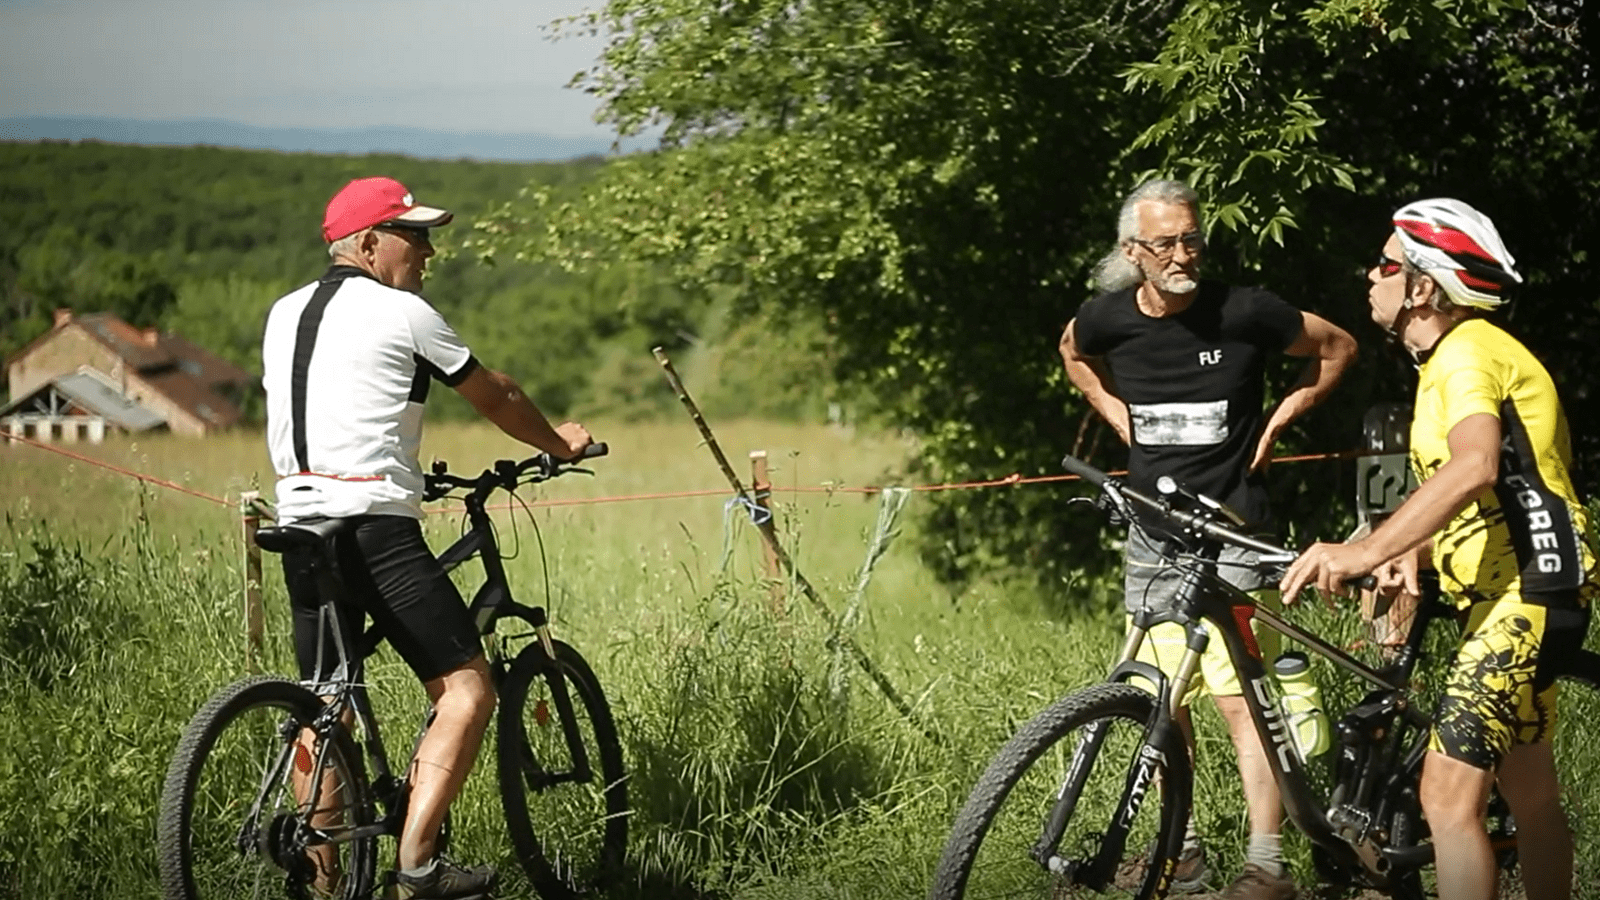 6 dagen fietsen in de regio Charolais-Brionnais